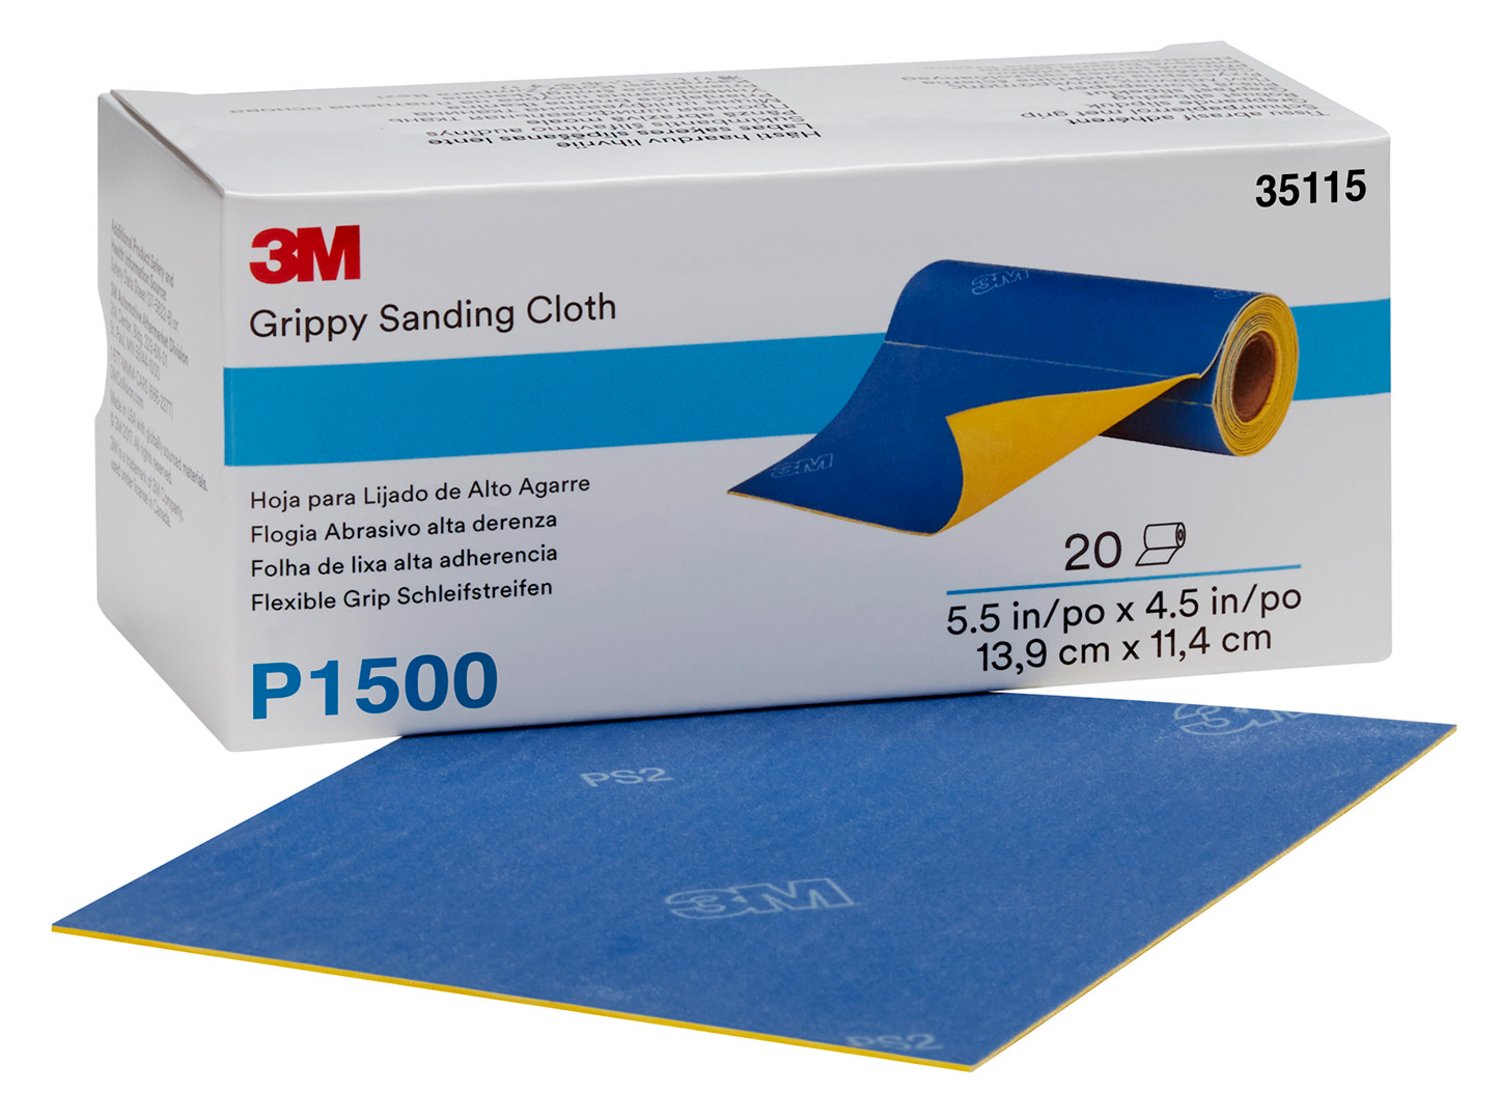 7100142957 - 3M Grippy Sanding Cloth 35115, P1500 Grade, 5.5 in x 4.5 in, 20
Sheets/Roll, 4 Rolls/Case